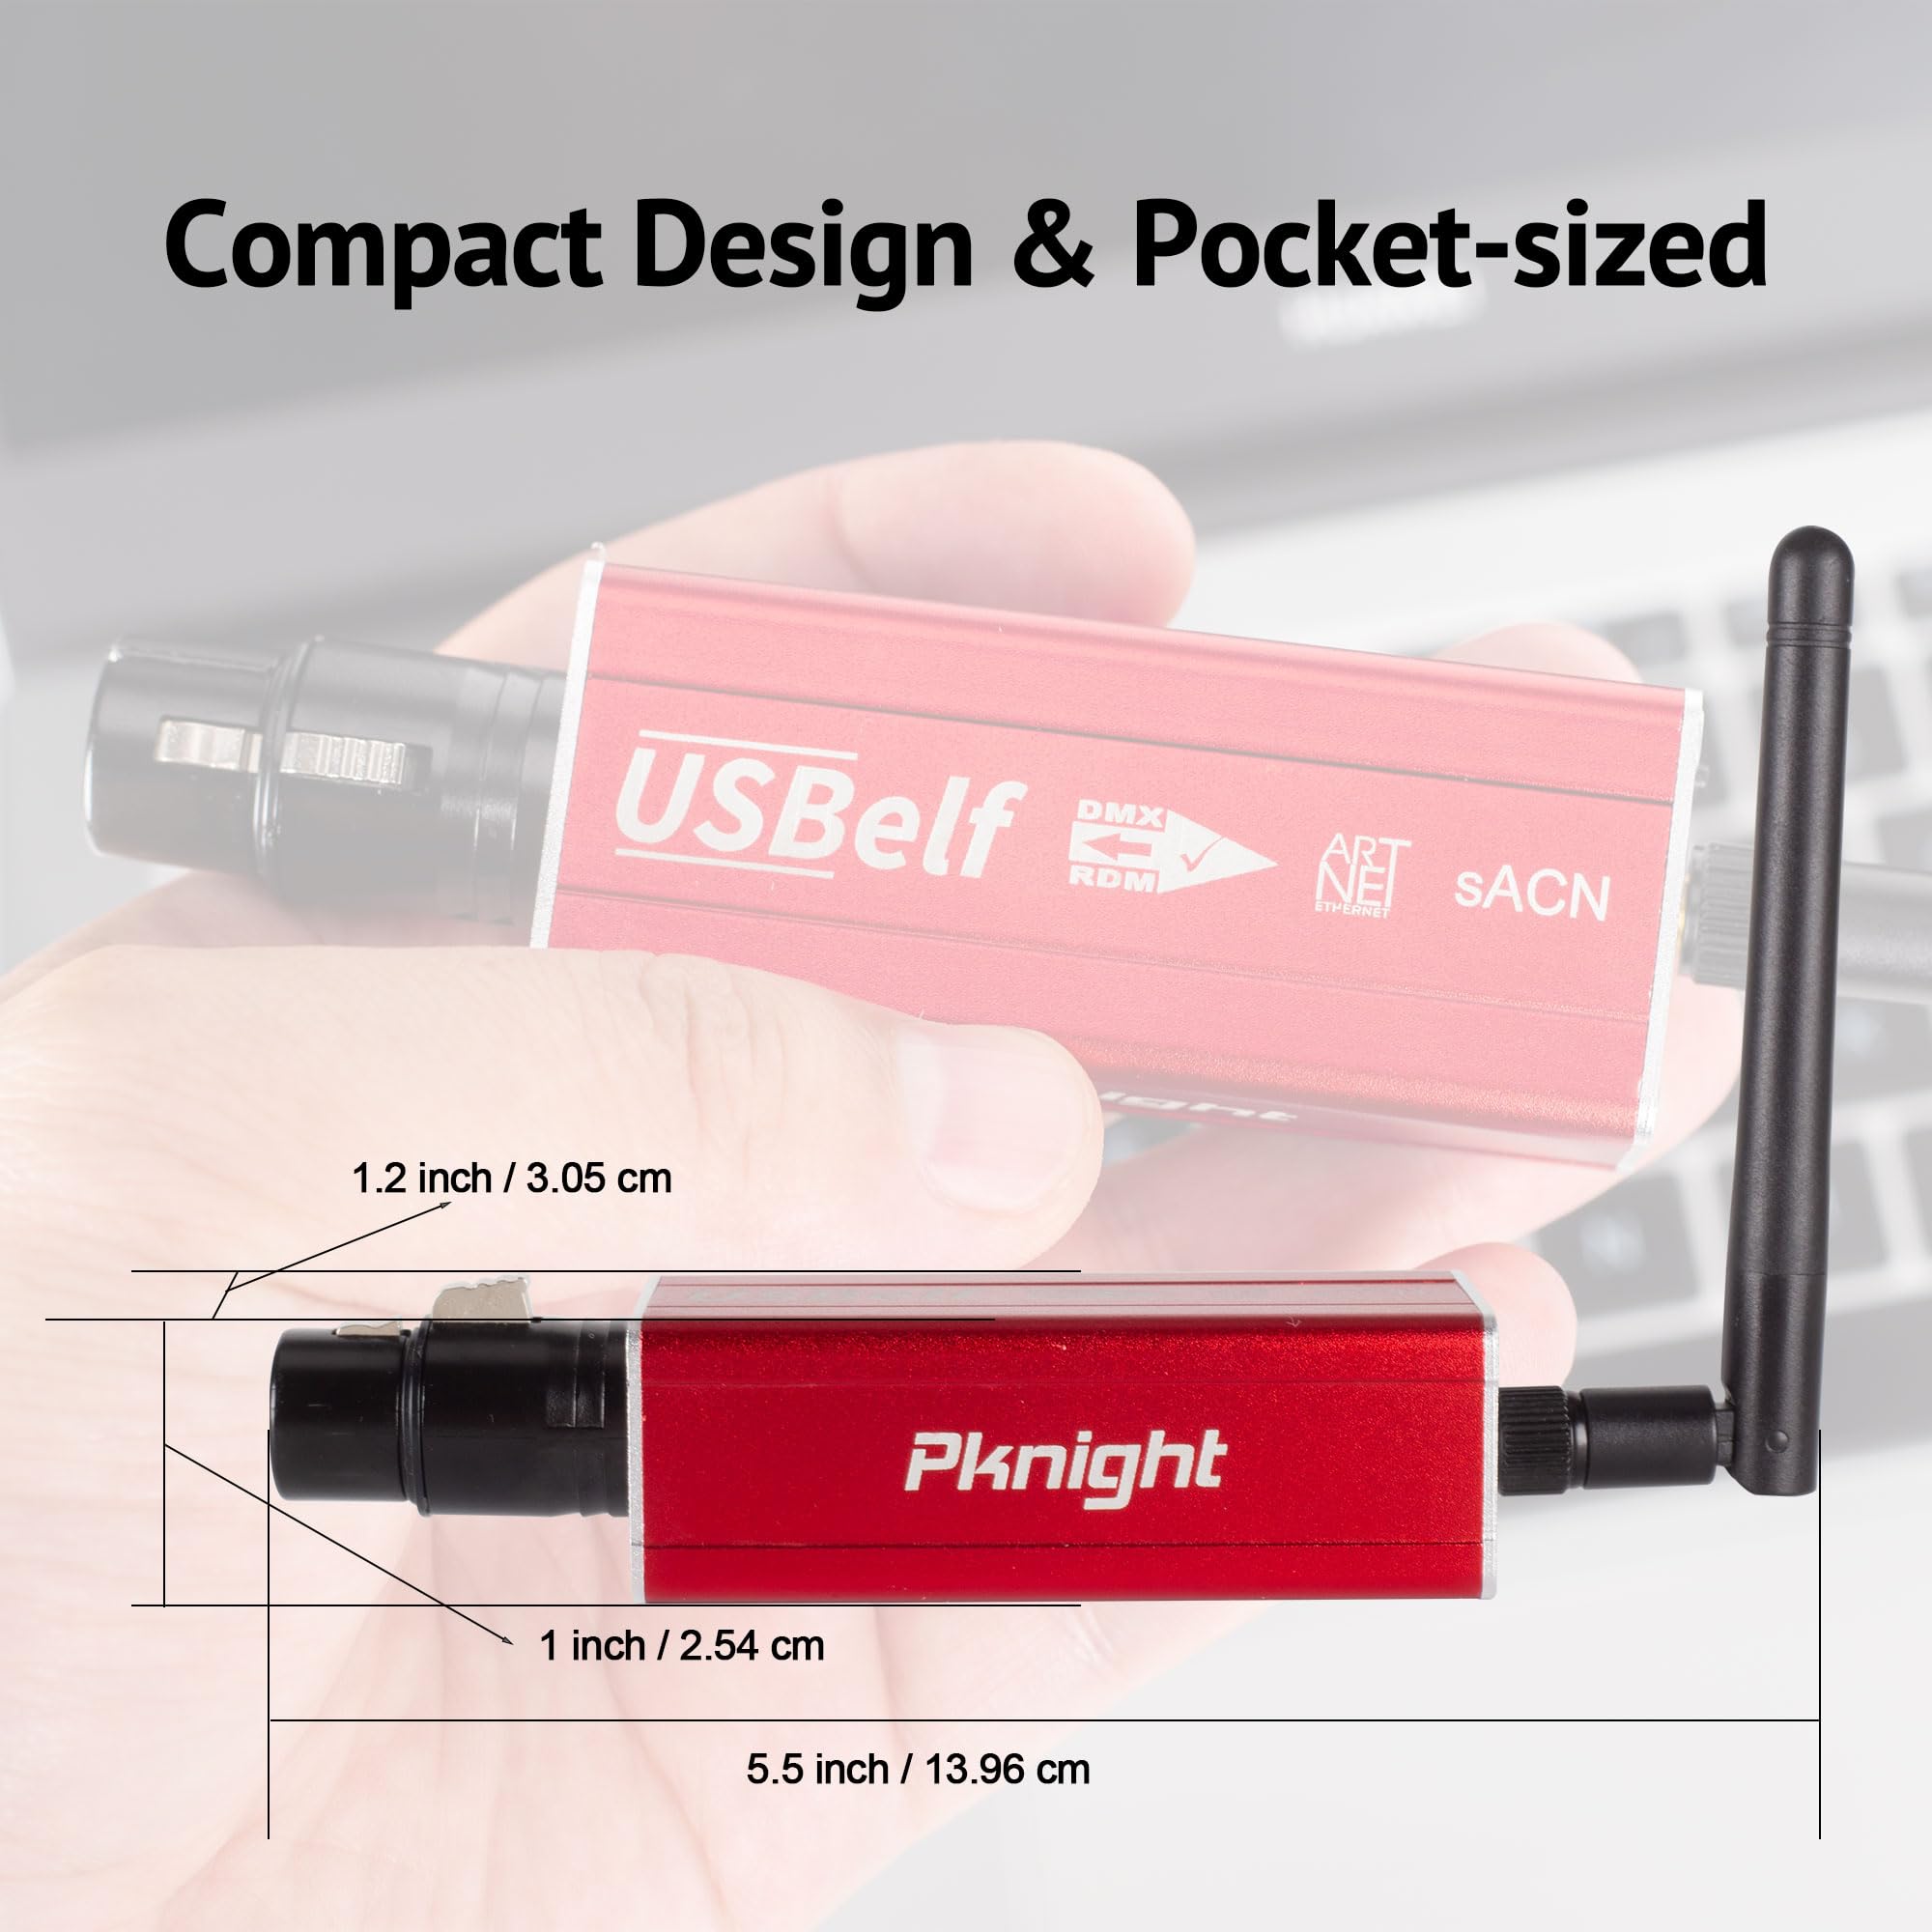 Pknight RDM ArtNet DMX 512 Lighting Controller Interface, Compact One Universe USBelf